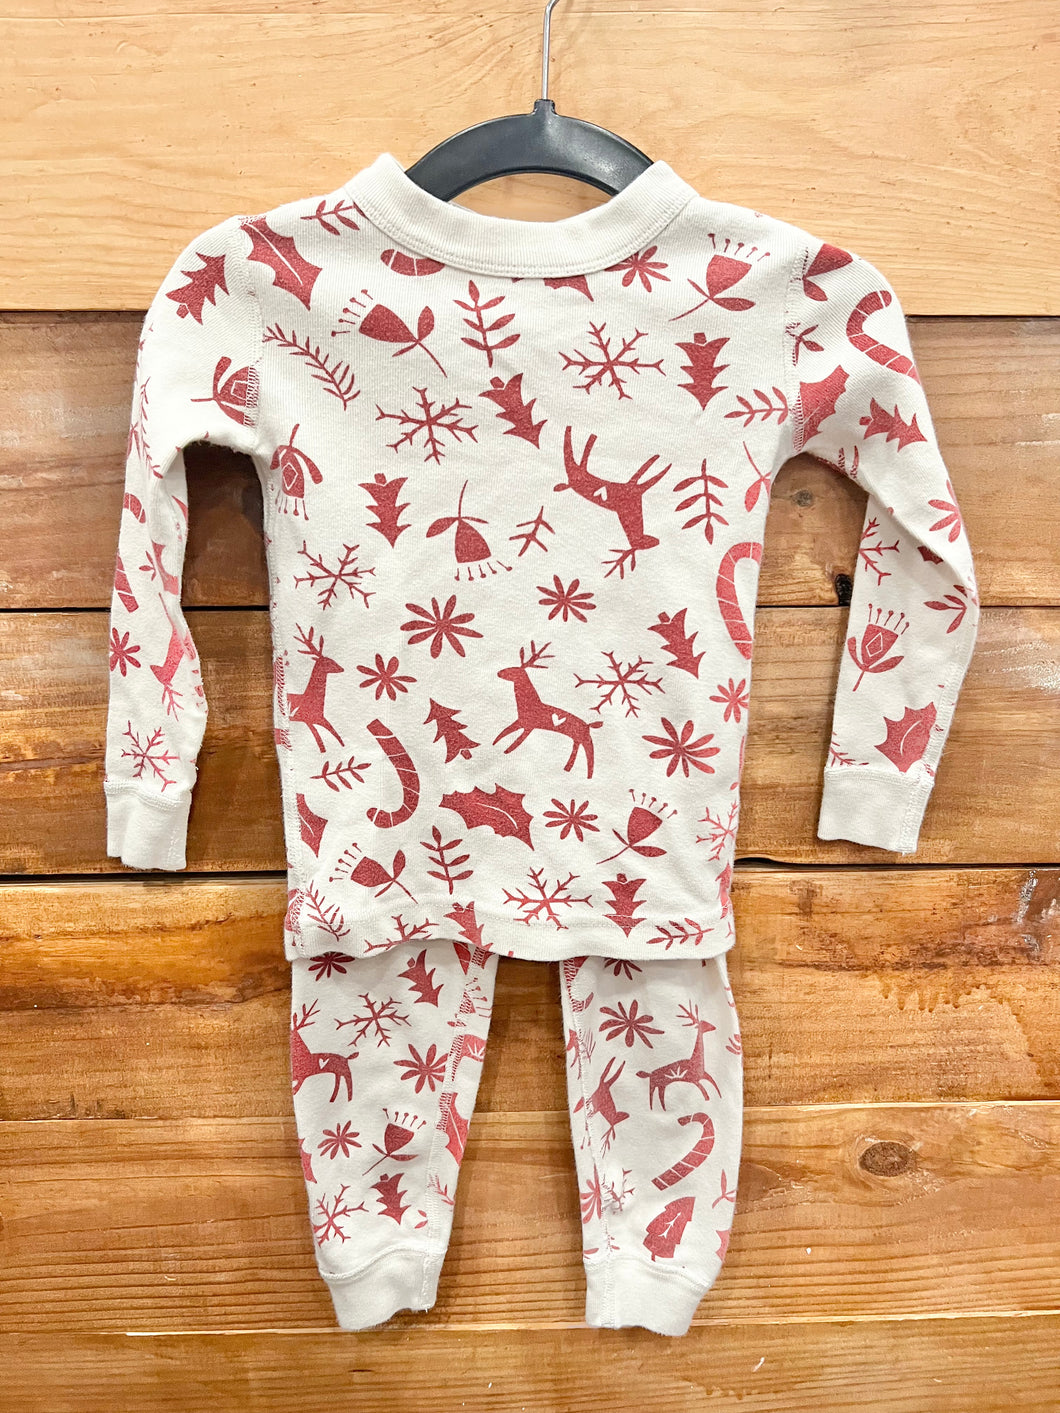 Hanna Andersson Reindeer Snowflake Pajamas Size 3T